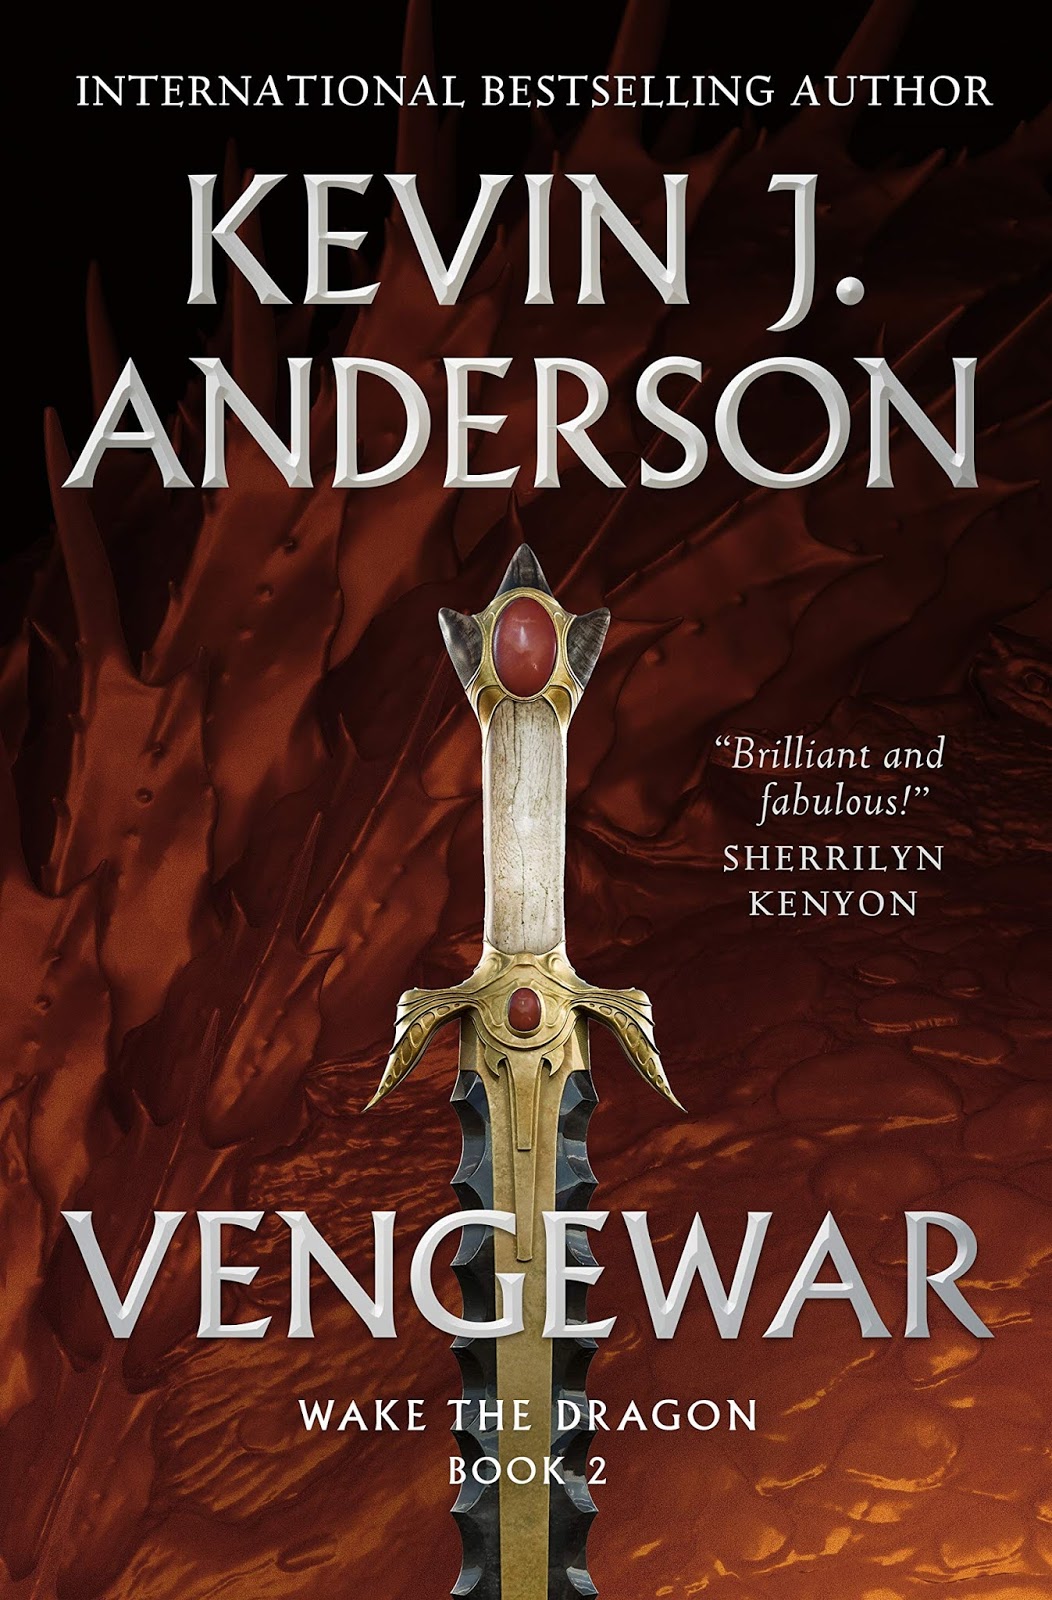 Vengewar by Kevin J. Anderson